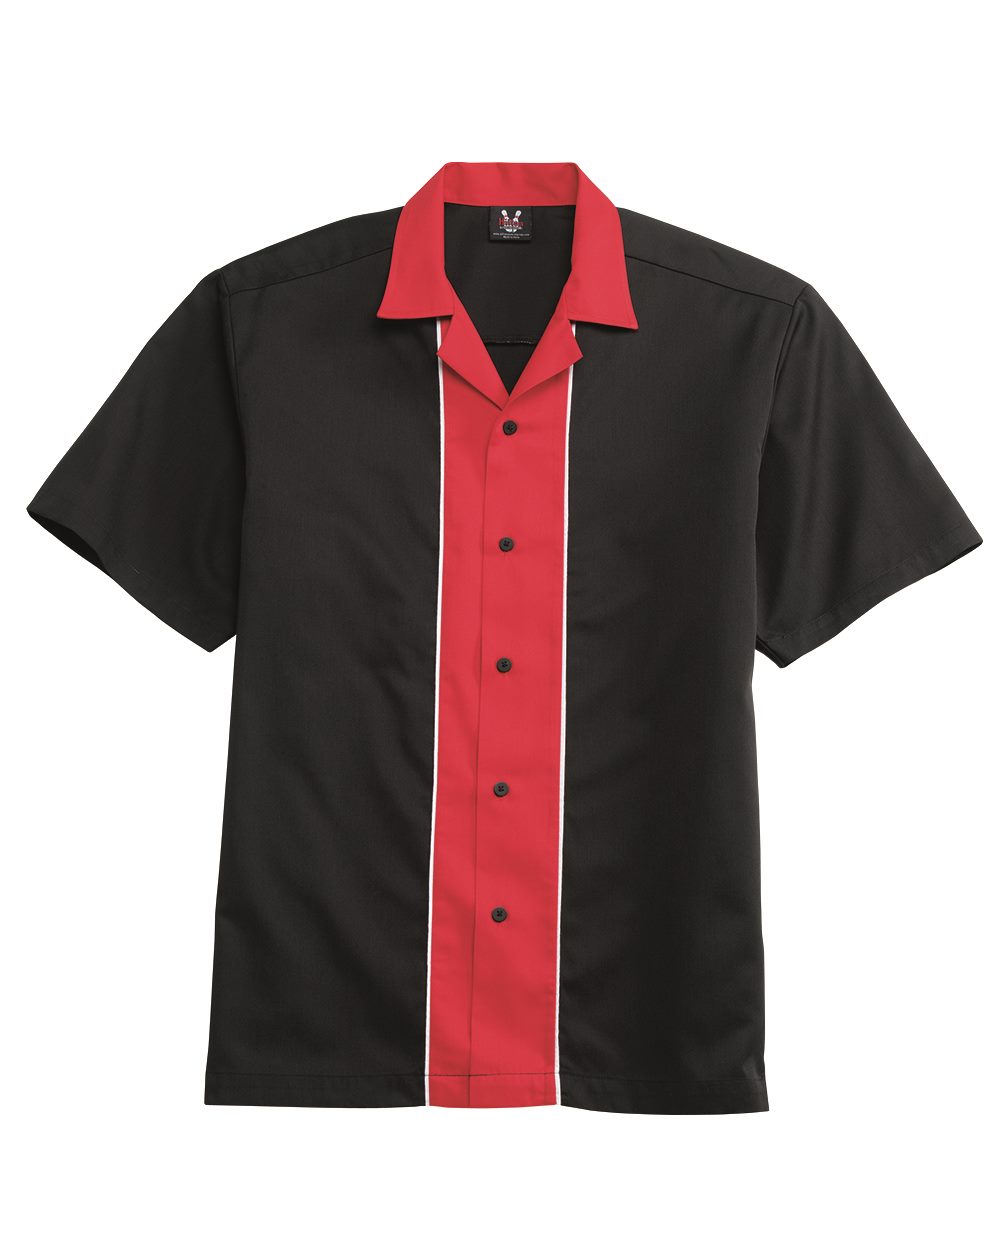 Hilton HP2246 - Quest Bowling Shirt